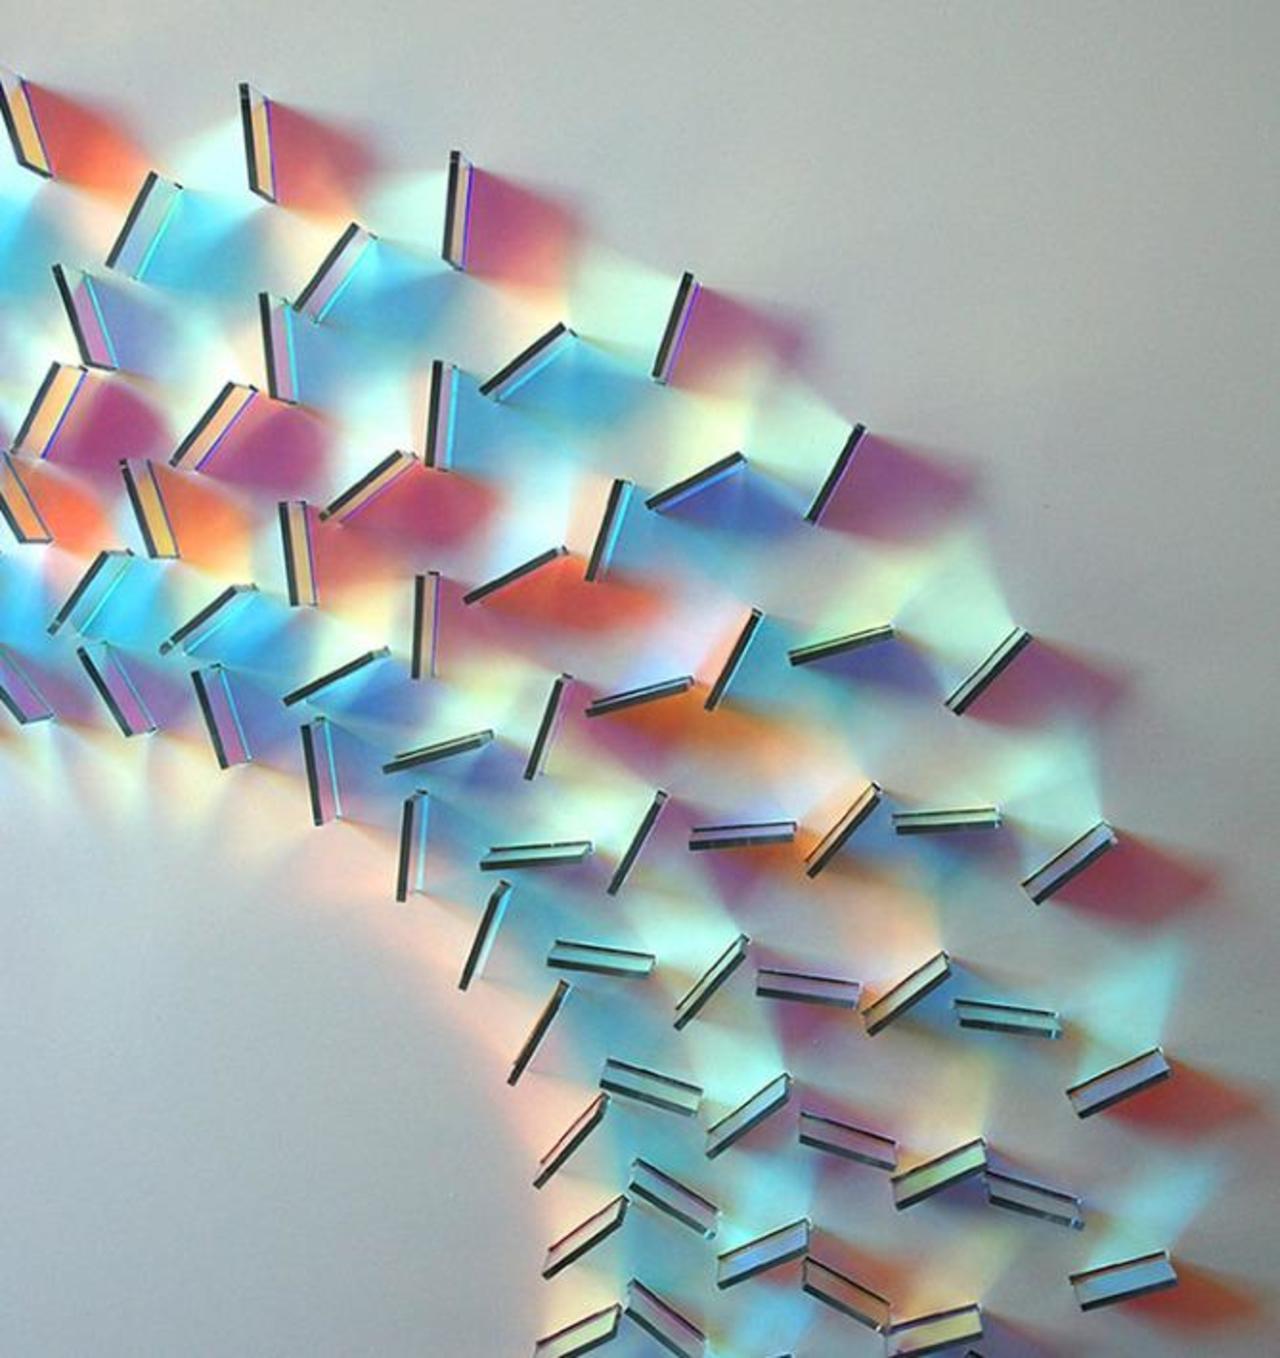 Chris Wood – L’effimera potenza  ... - http://www.artwort.com/2015/01/27/arte/chris-wood-leffimera-potenza-della-luce/ - #Art #Arte #Glass #Light #LightArt #Percezione http://t.co/3qMqnYtlii